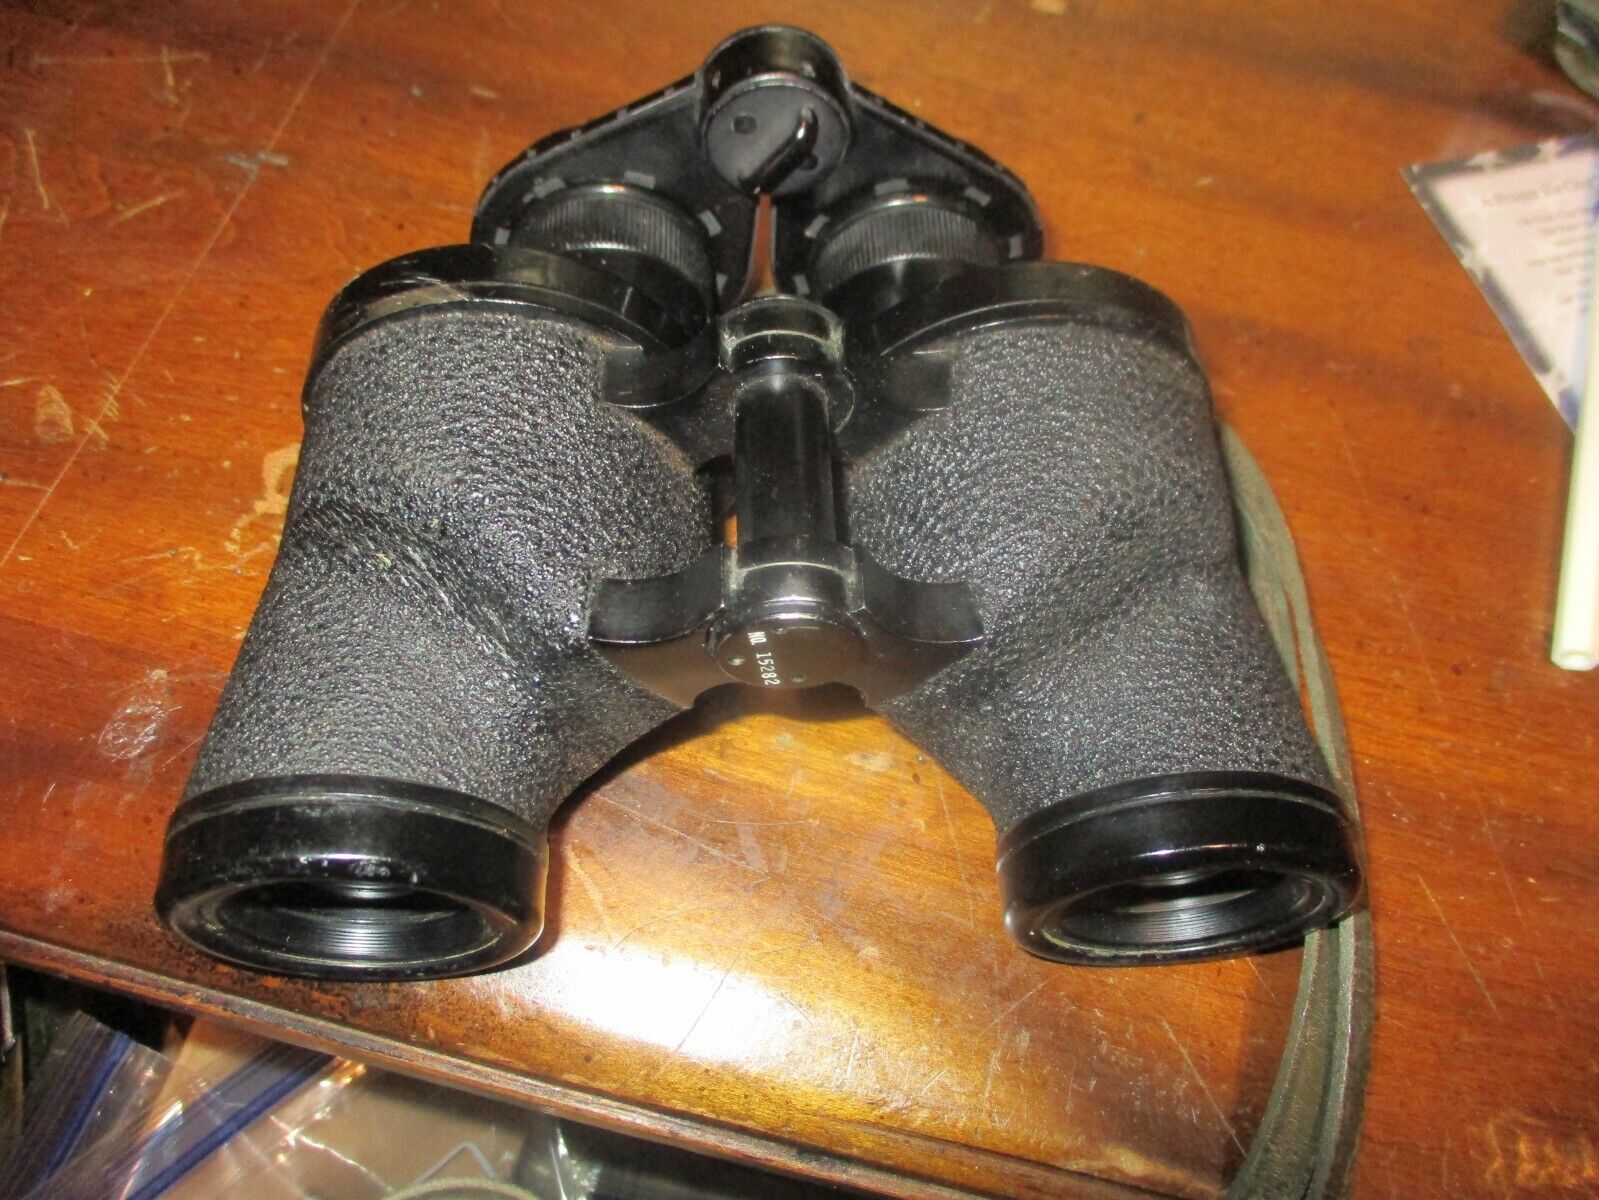 ww2 binoculars with filters